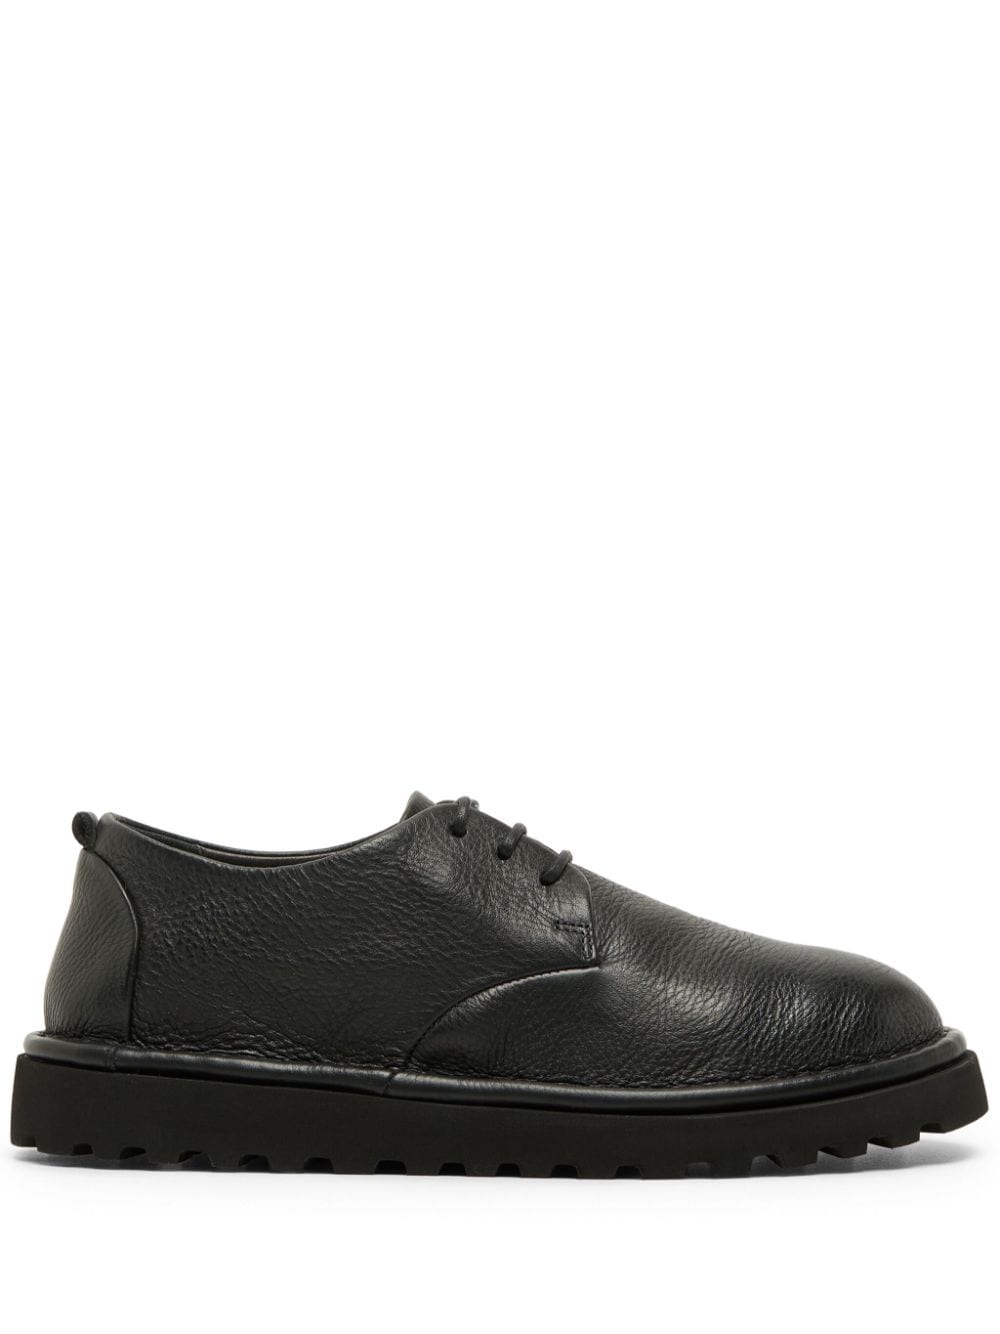 Marsèll Sancrispa Alta Pomice Oxford shoes - Black von Marsèll